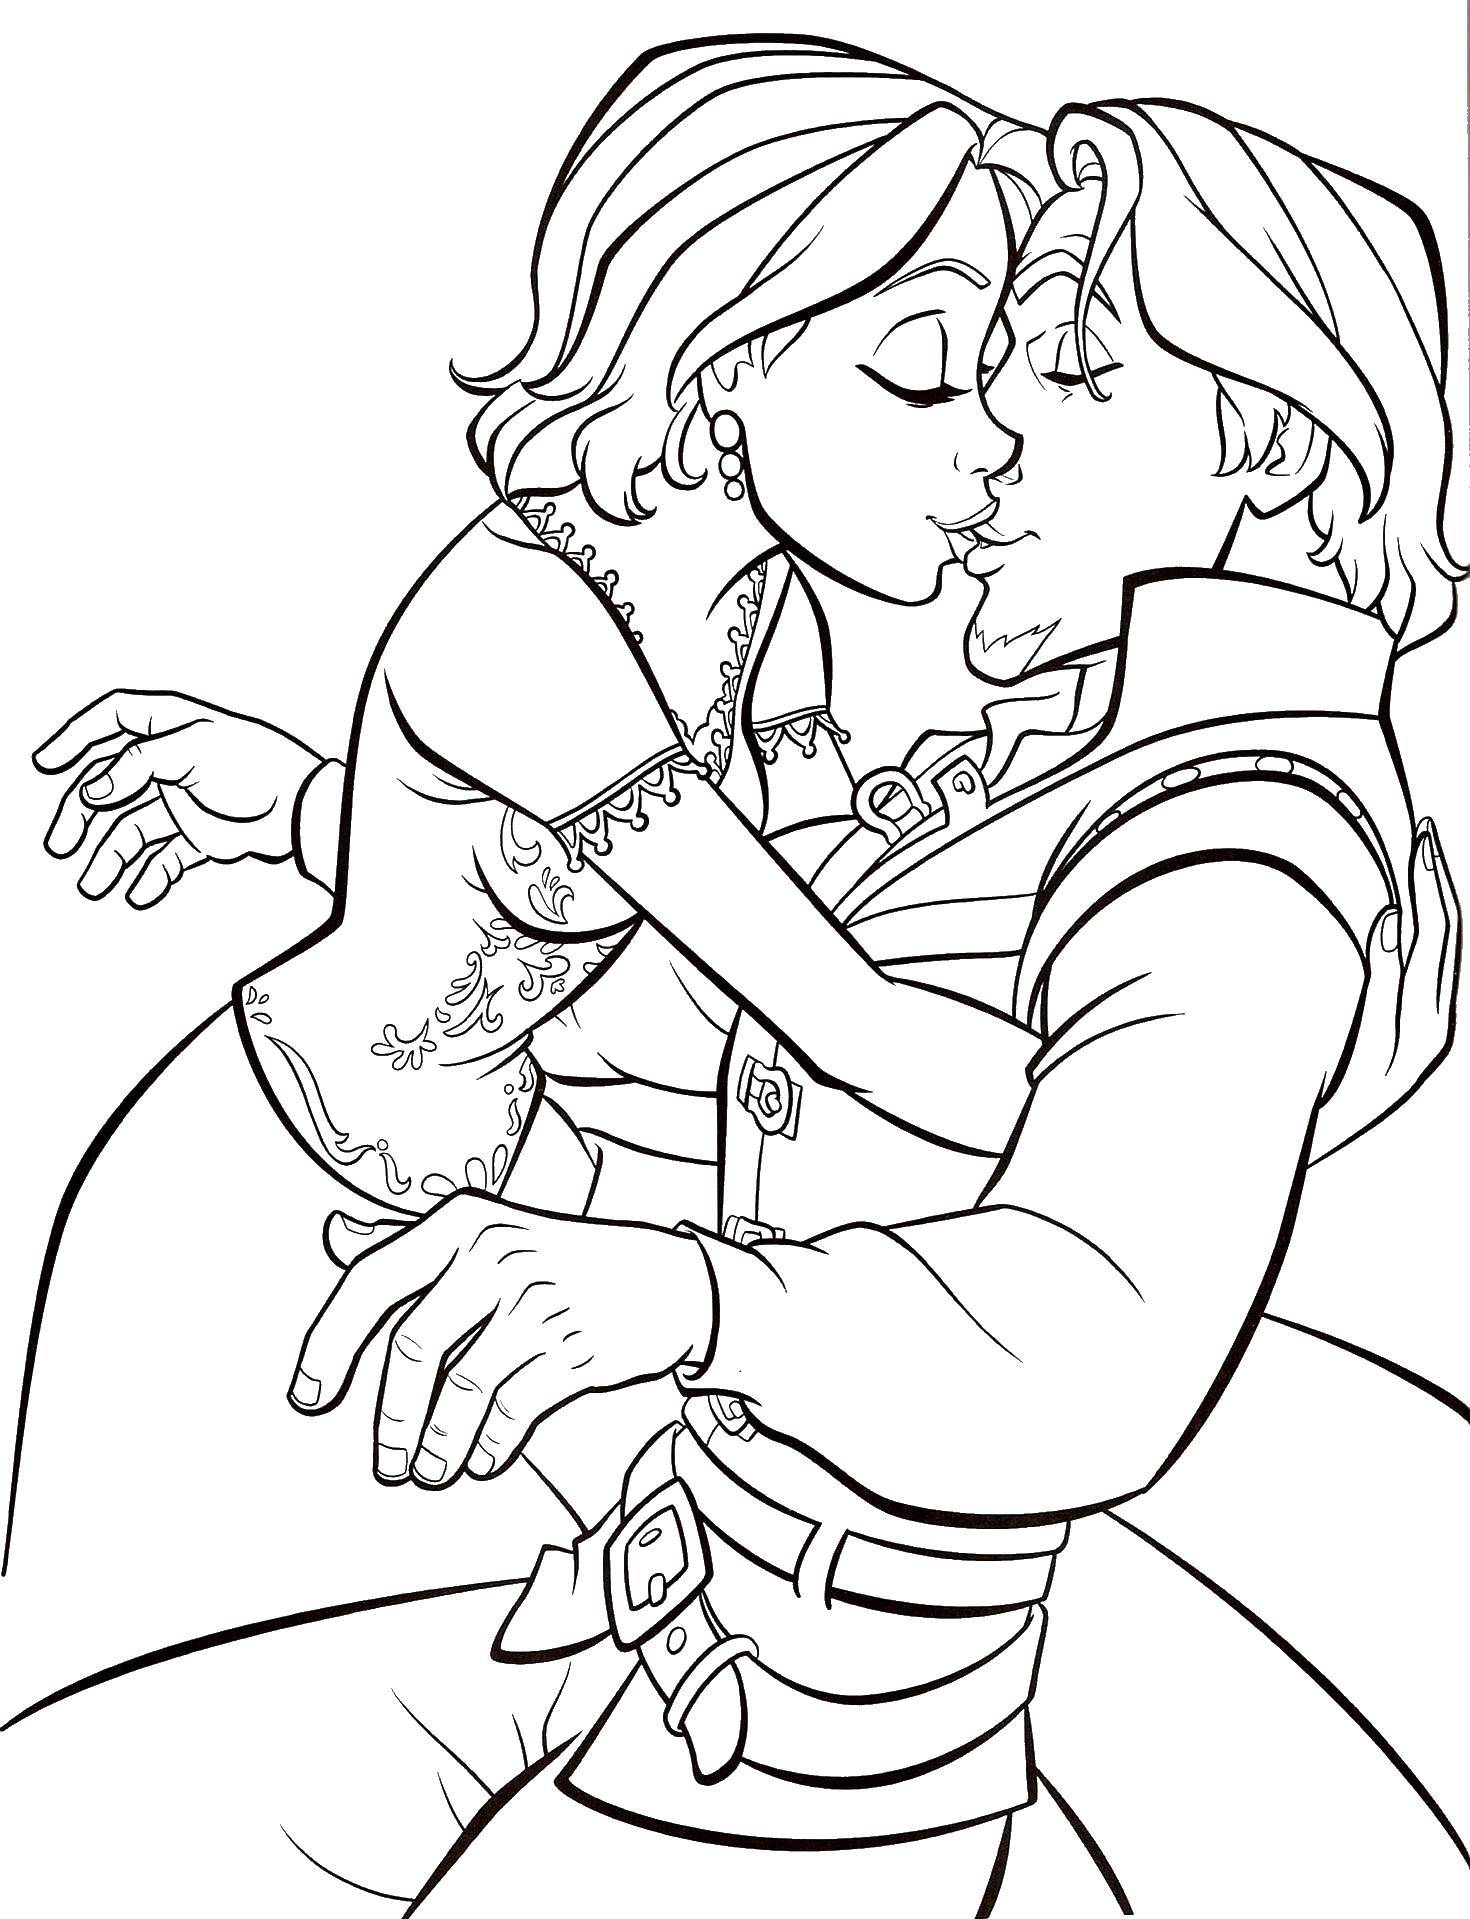 Coloring Rapunzel kisses Flynn. Category coloring. Tags:  Rapunzel , Flynn, kiss.